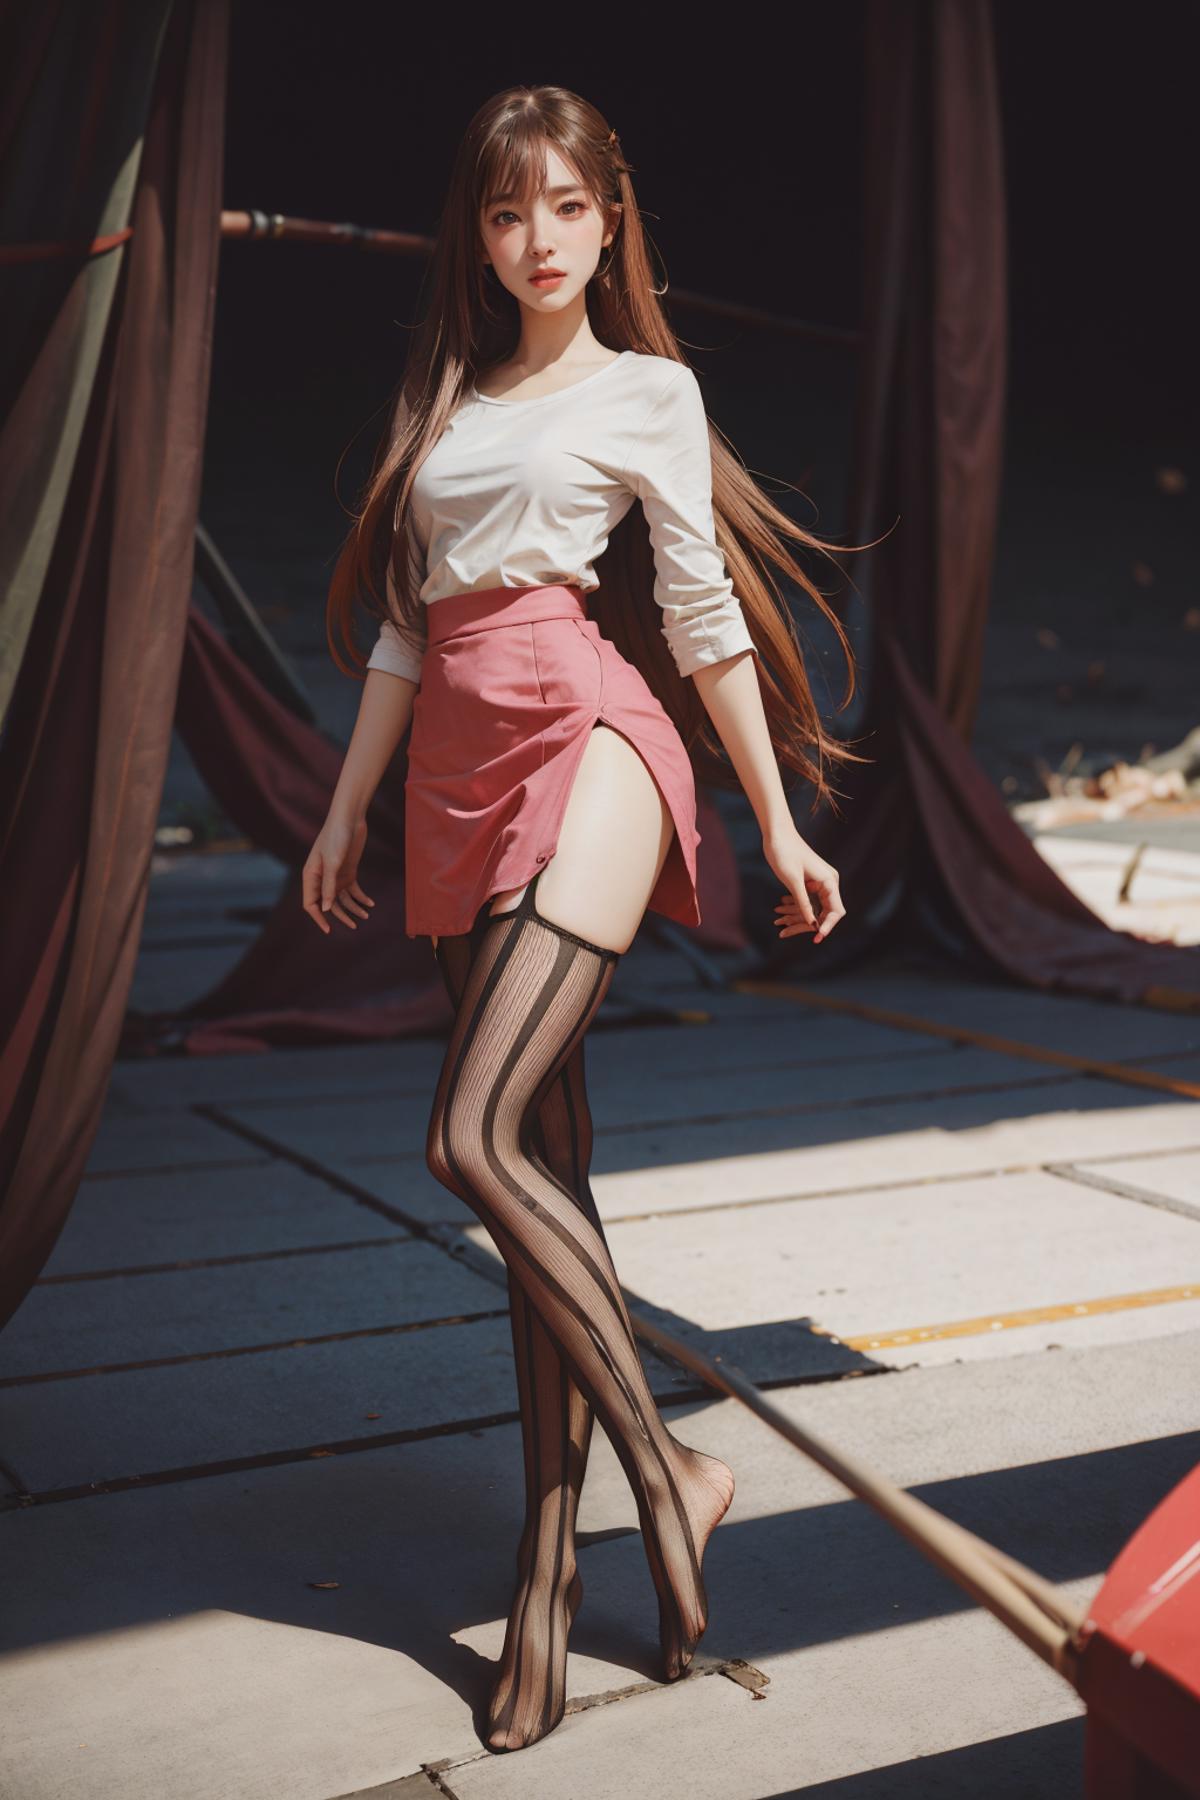 vertical-striped legwear image by ruanyi